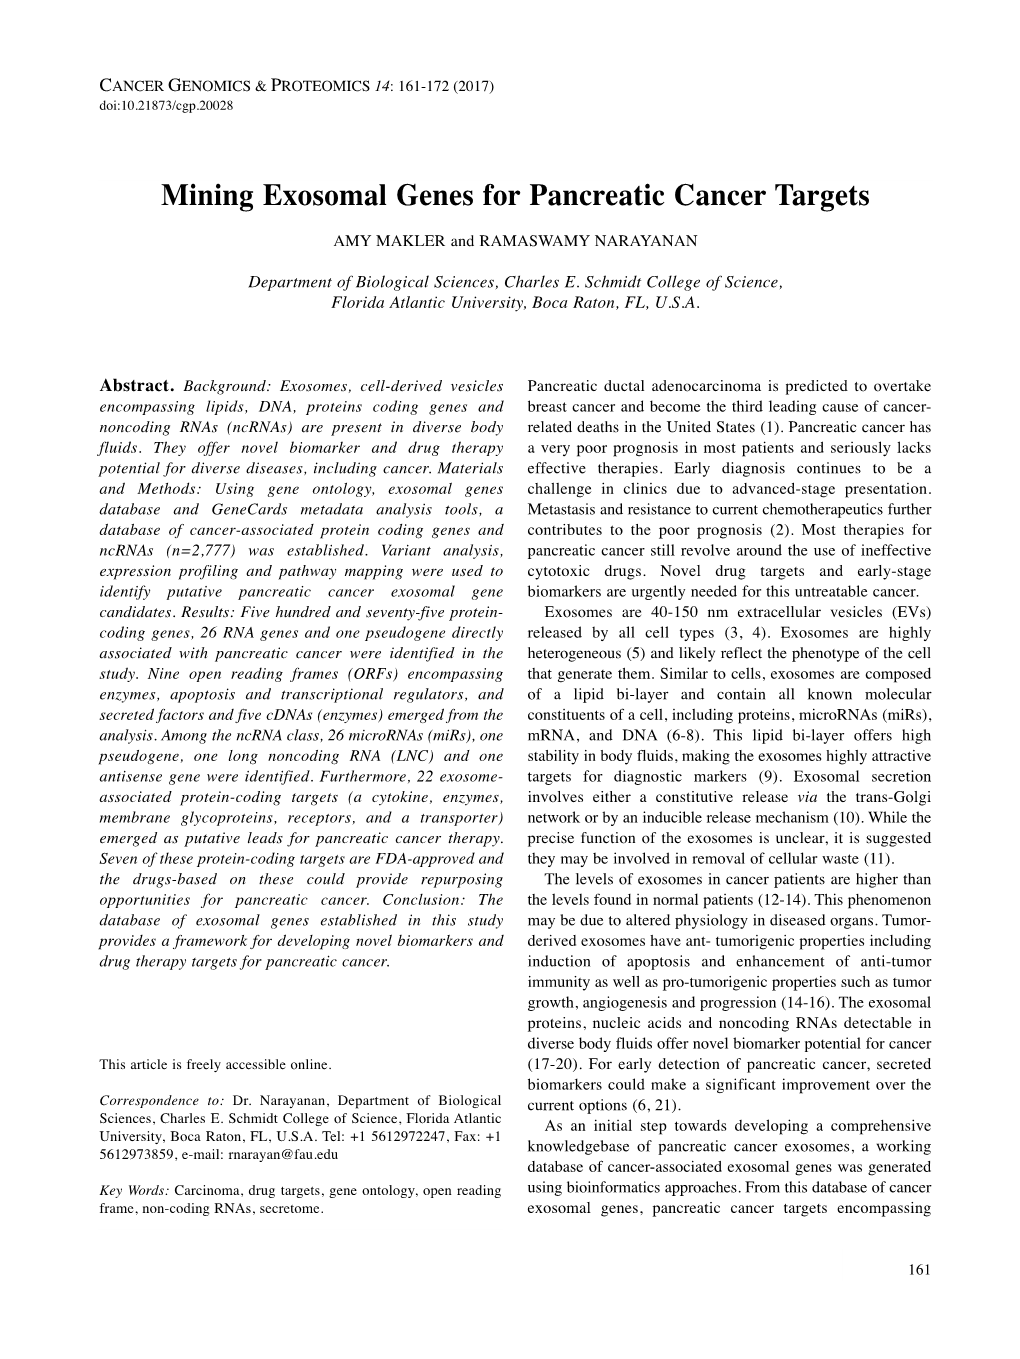 Mining Exosomal Genes for Pancreatic Cancer Targets AMY MAKLER and RAMASWAMY NARAYANAN